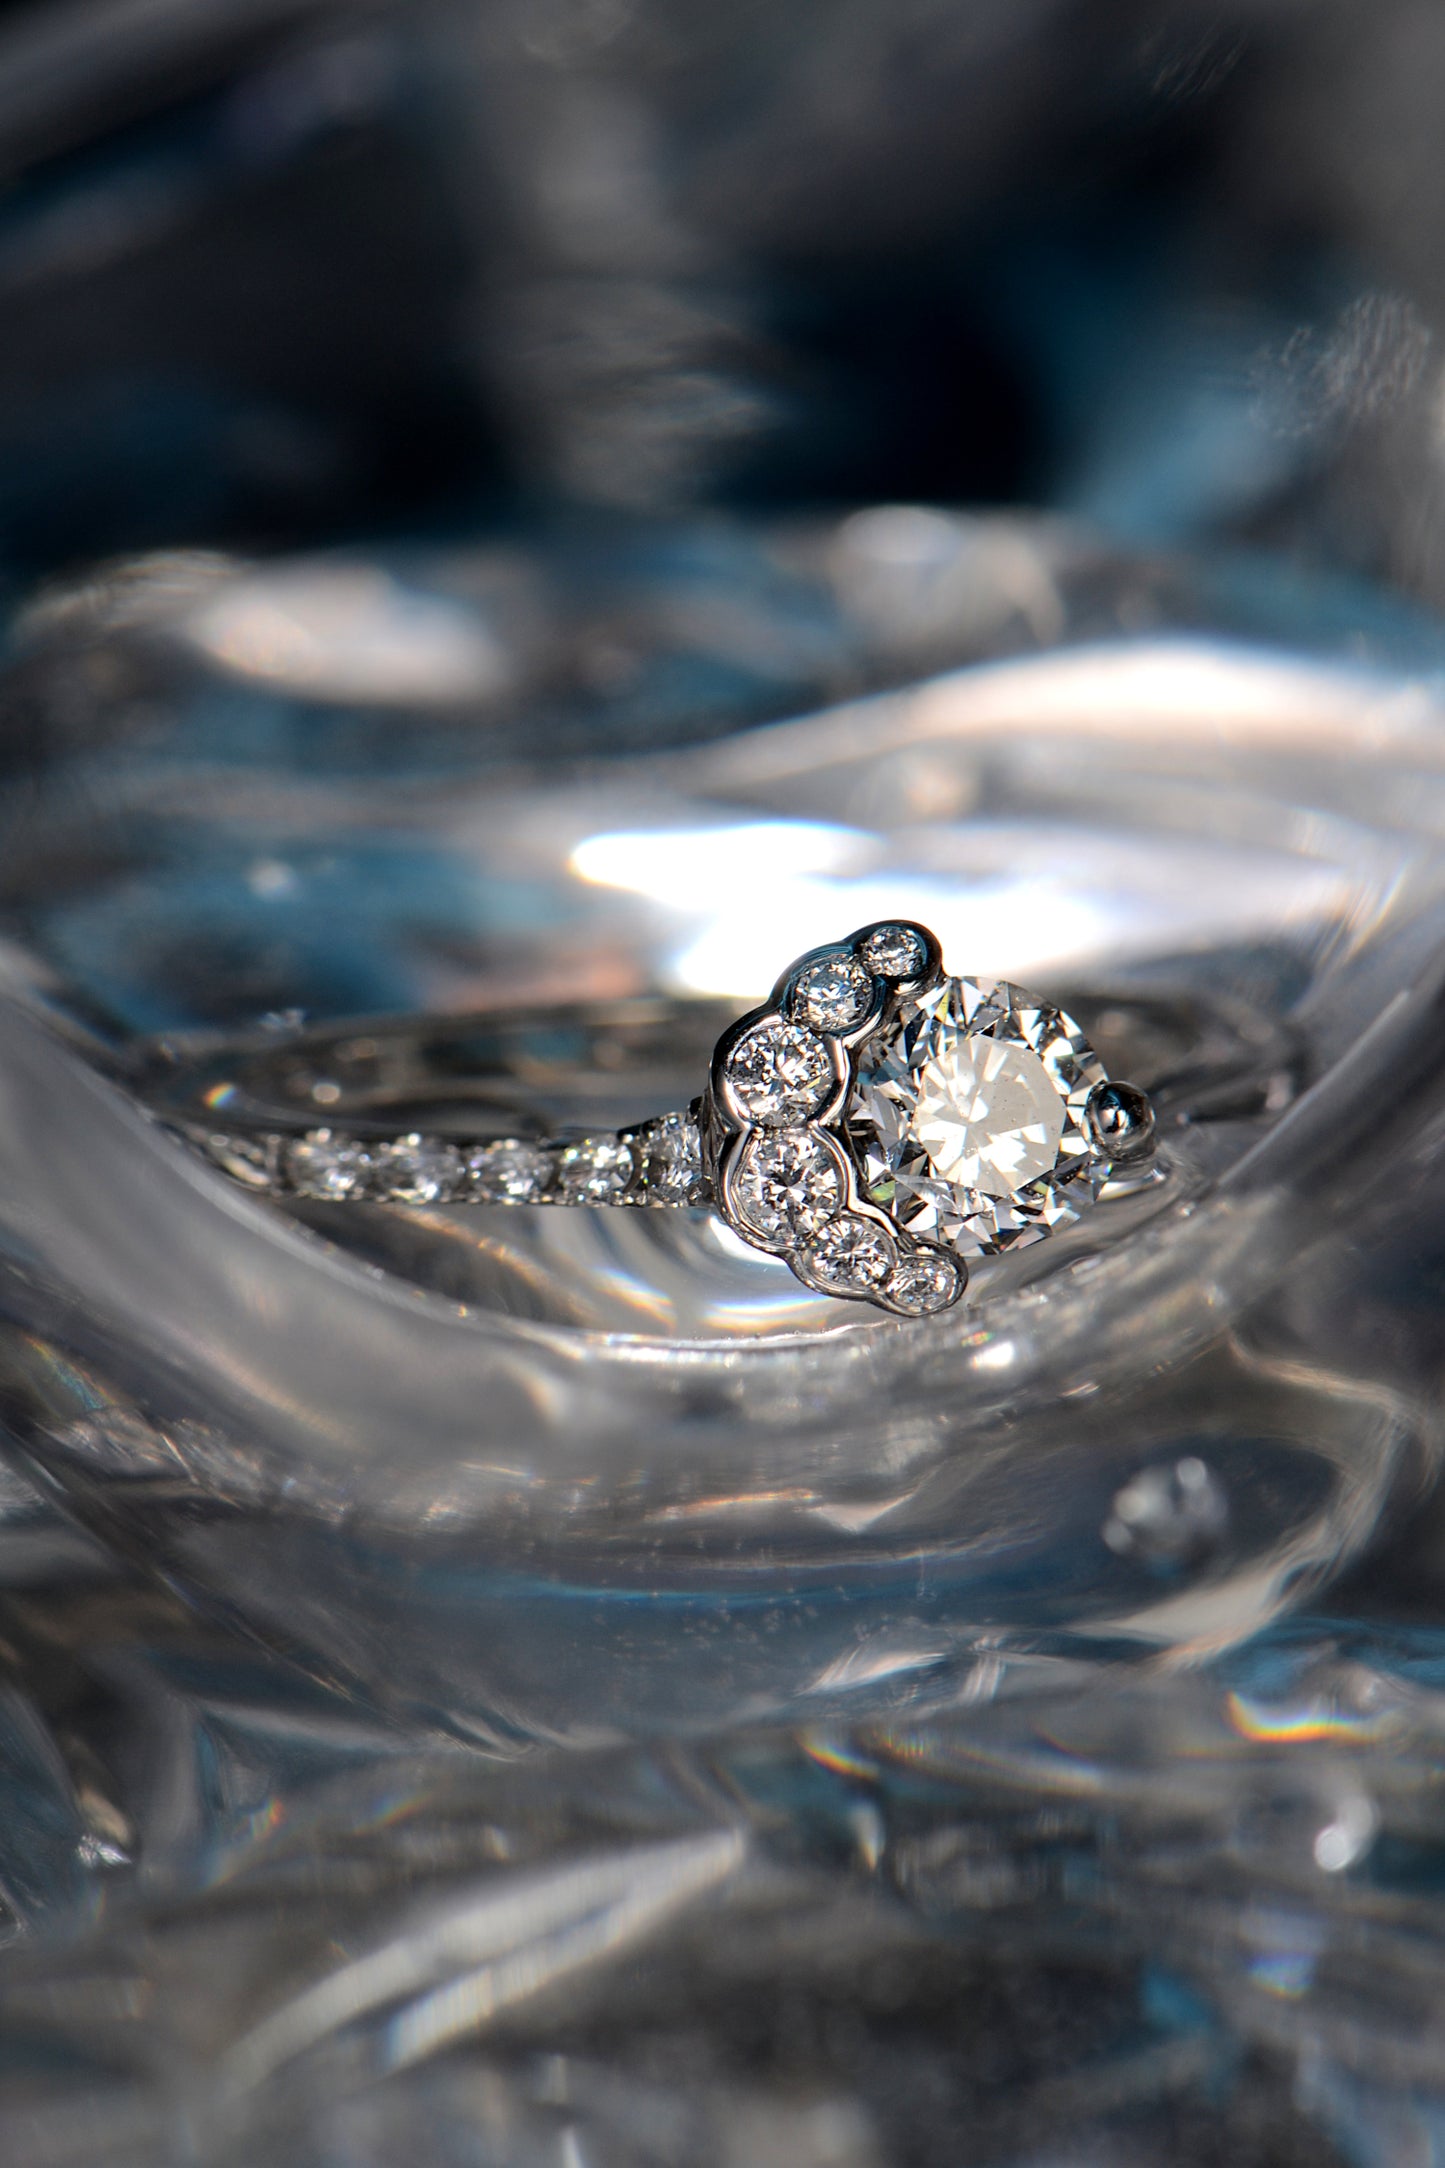 Fairypools natural diamond ring